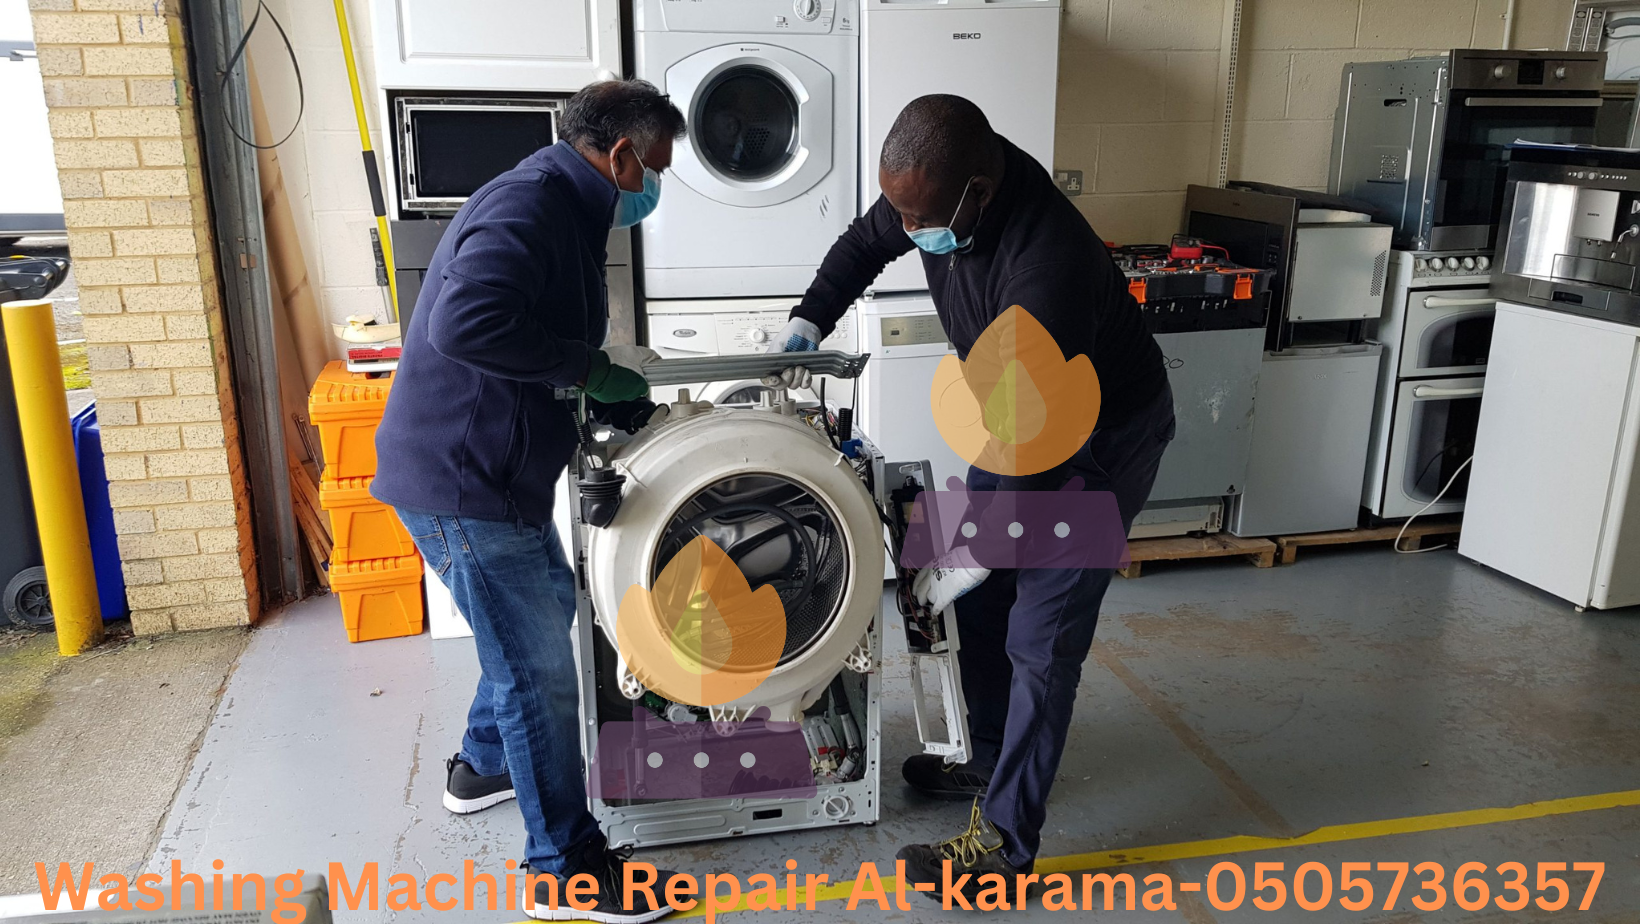 Washing Machine Repair Al-karama-0505736357